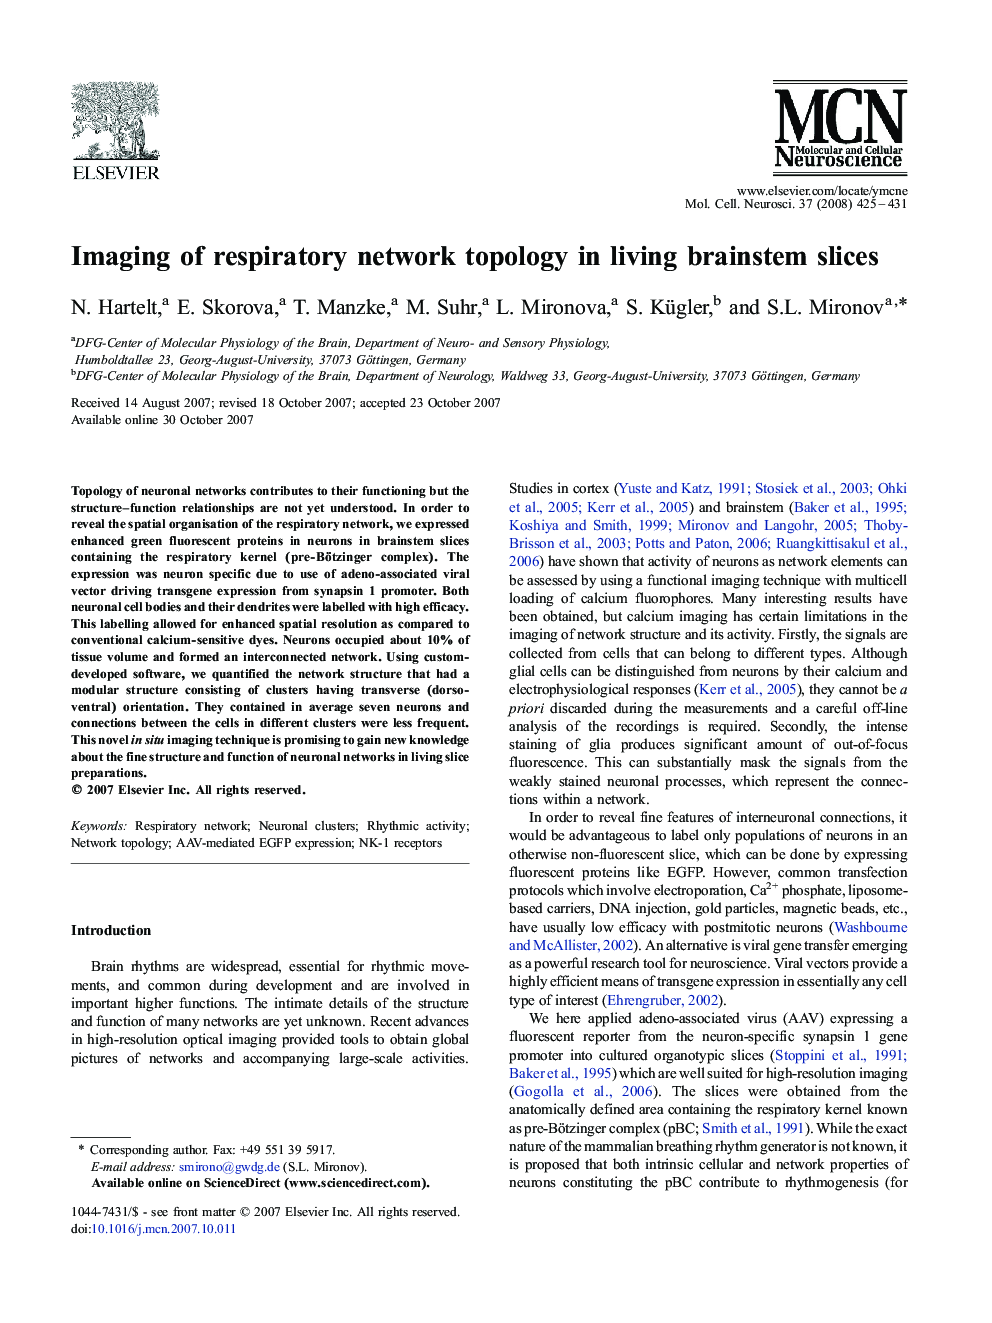 Imaging of respiratory network topology in living brainstem slices